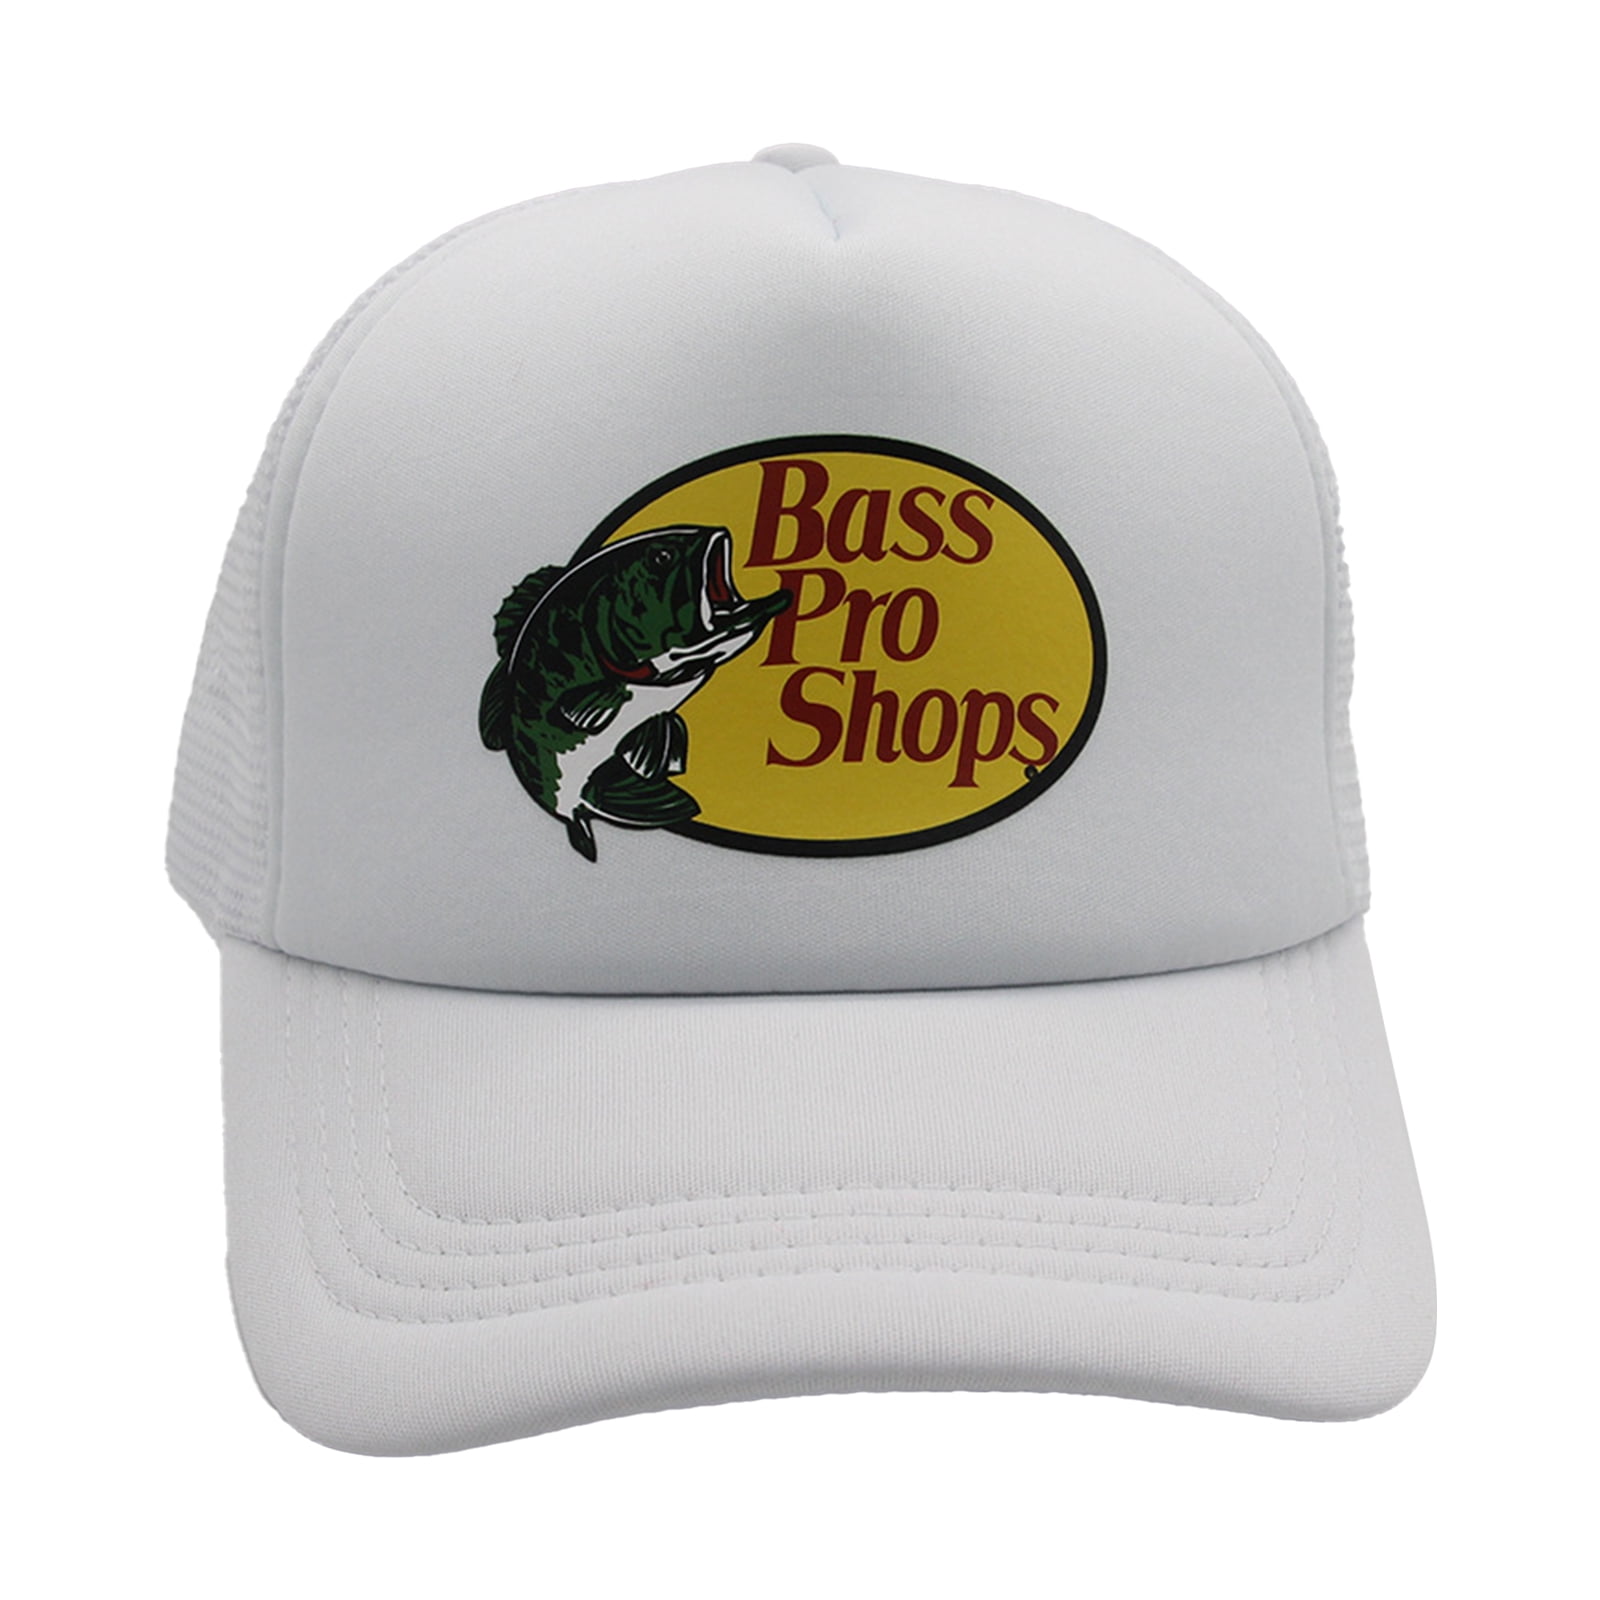 BASS PHO SHOPS Fishing Baseball Cap Hat Childs Size 4-7 Cotton